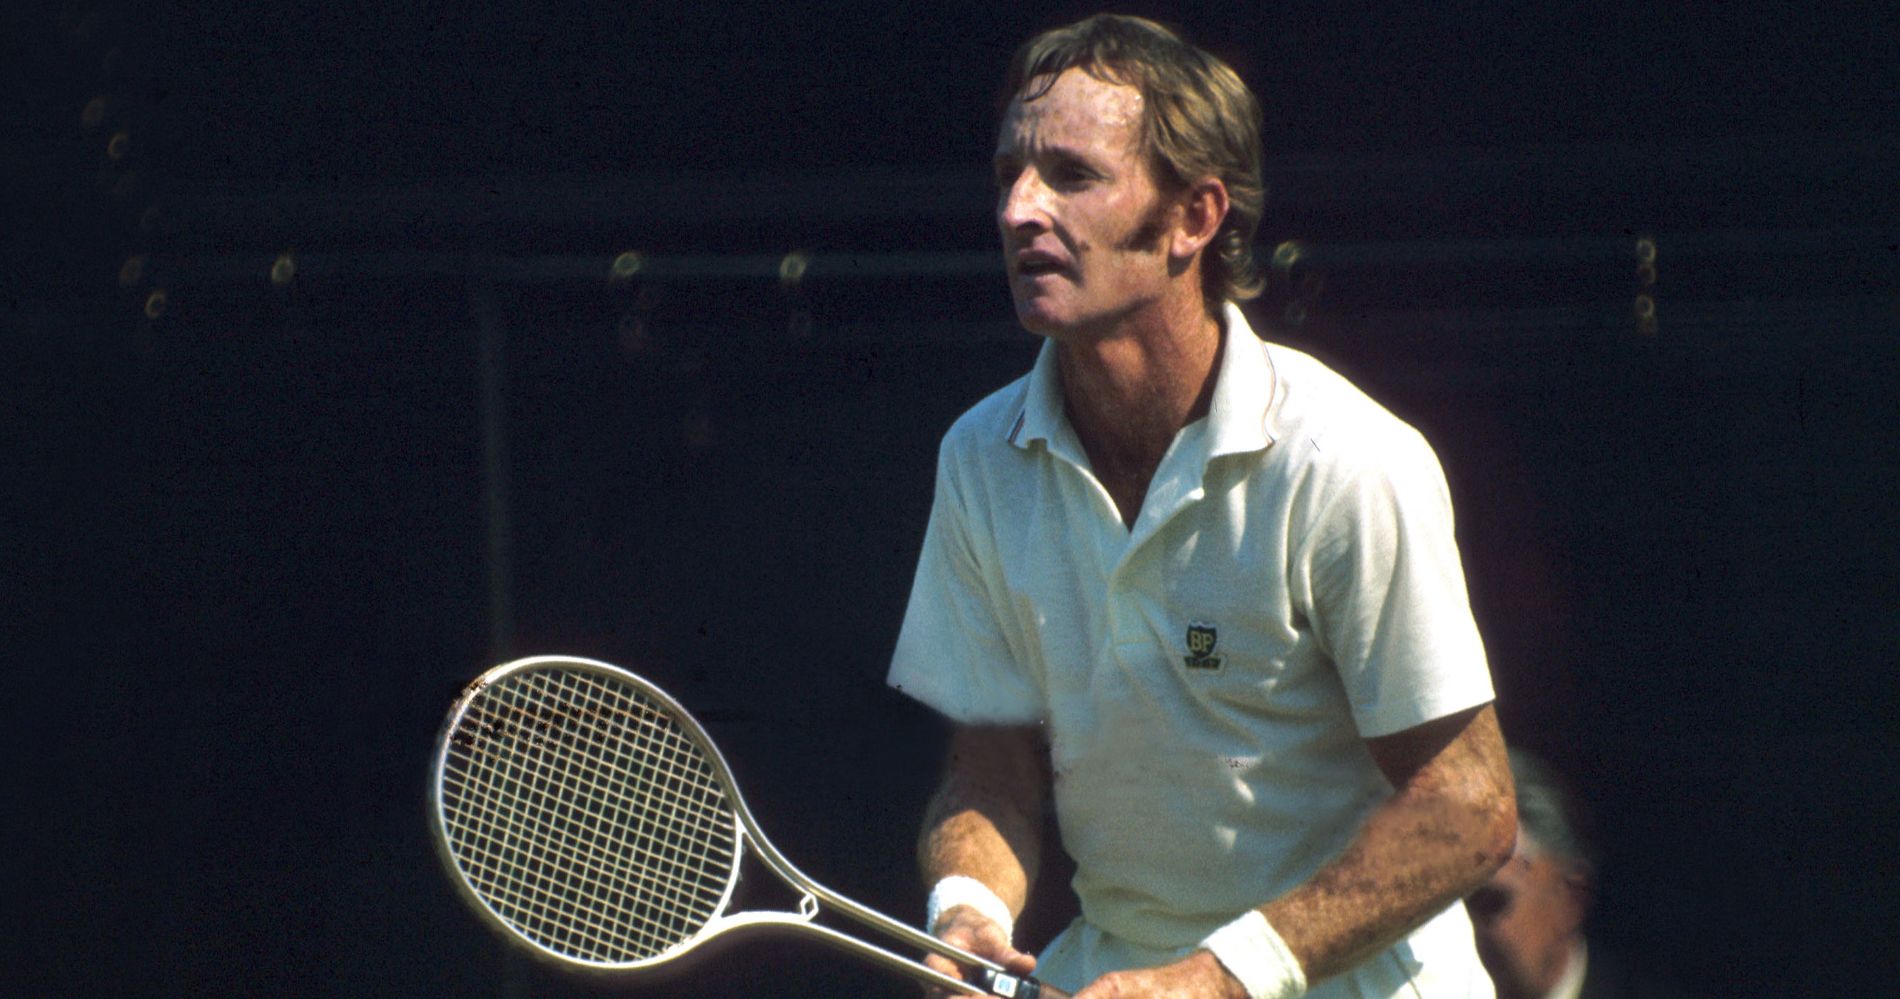 The day the Australian legend Rod Laver was born – Tennis Majors